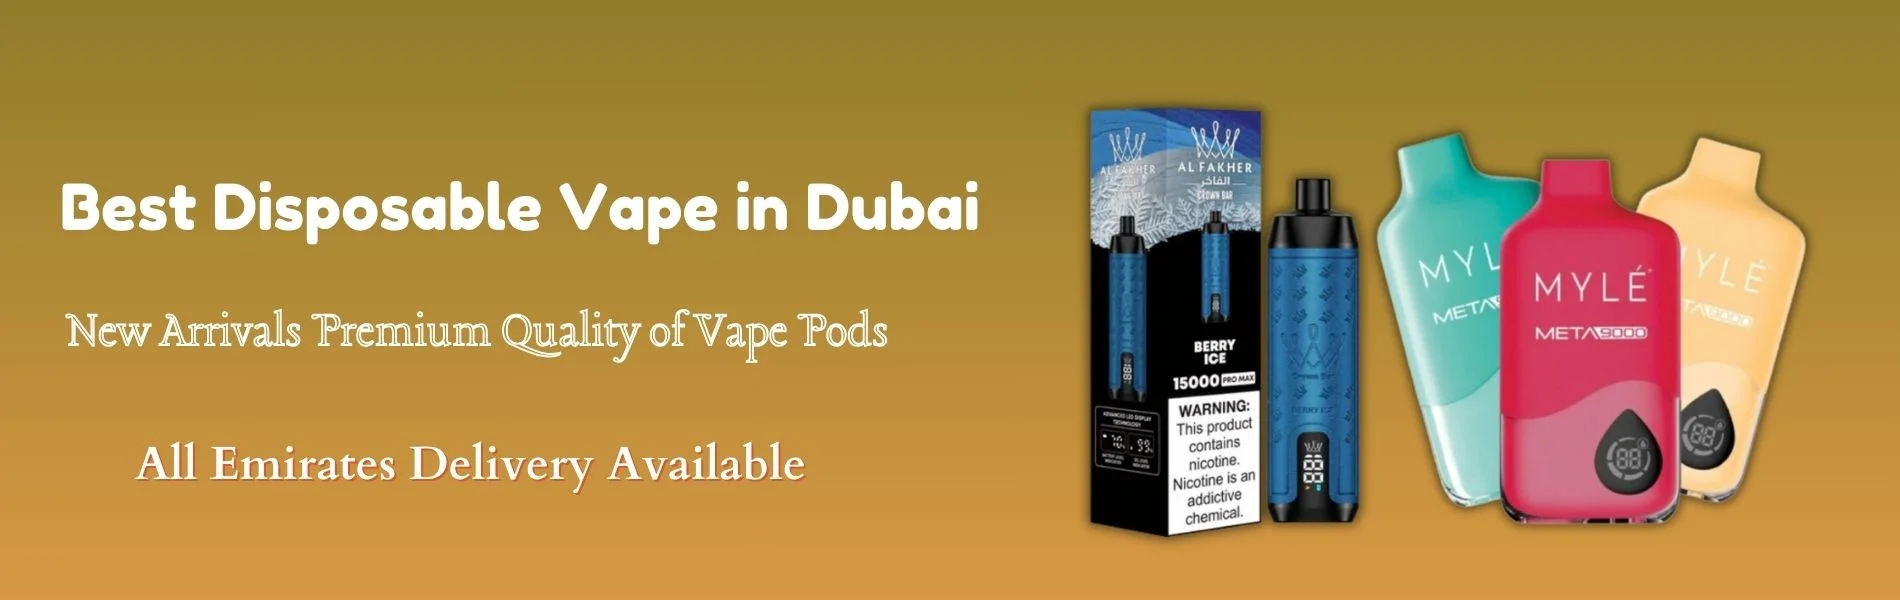 Best Disposable Vape in Dubai